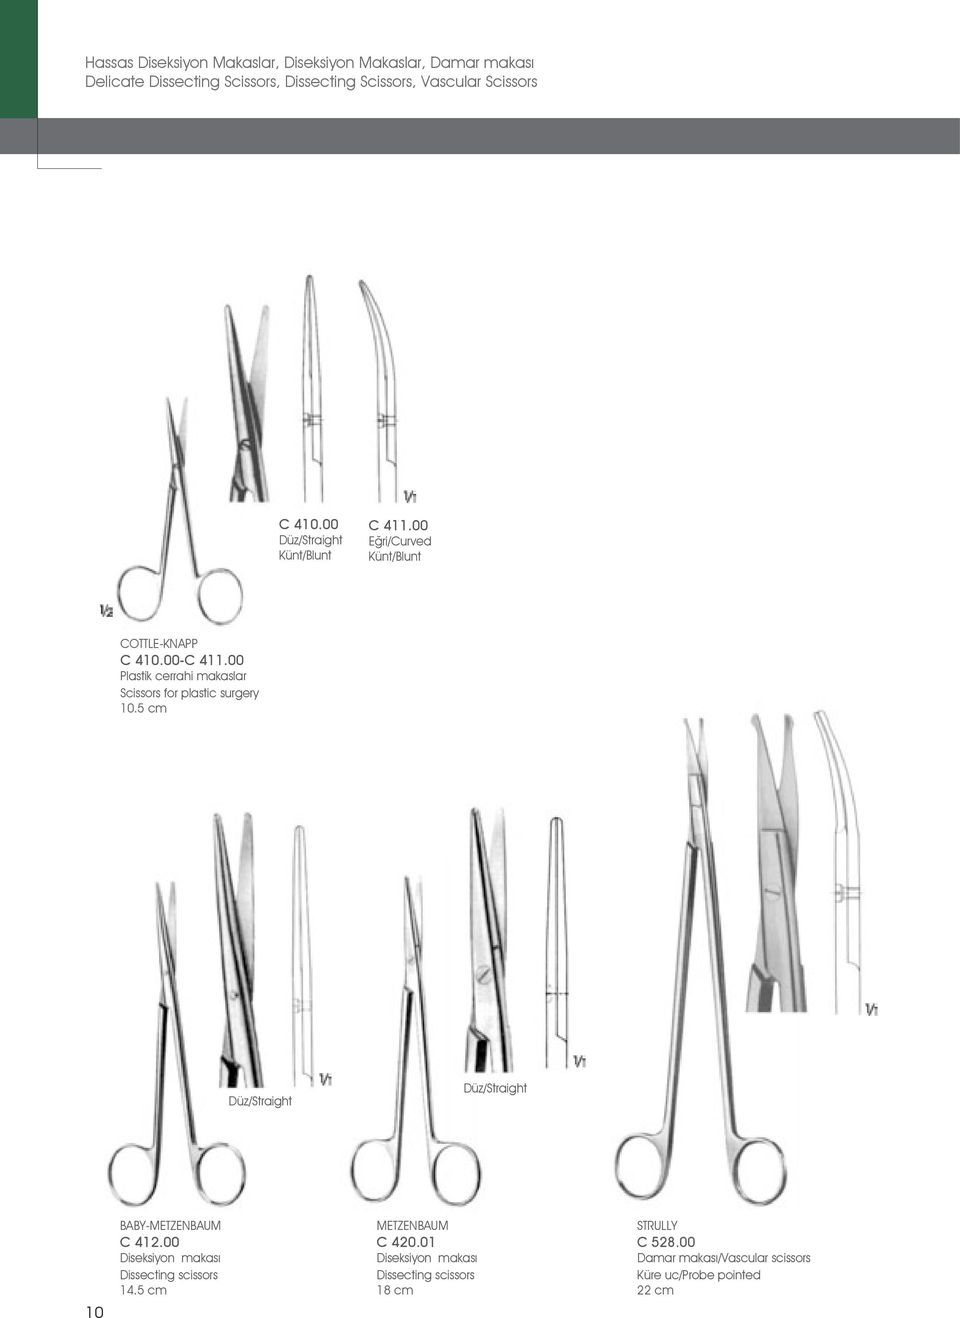 00 Plastik cerrahi makaslar Scissors for plastic surgery 0. cm Düz/Straight Düz/Straight 0 BABY-METZENBAUM C.